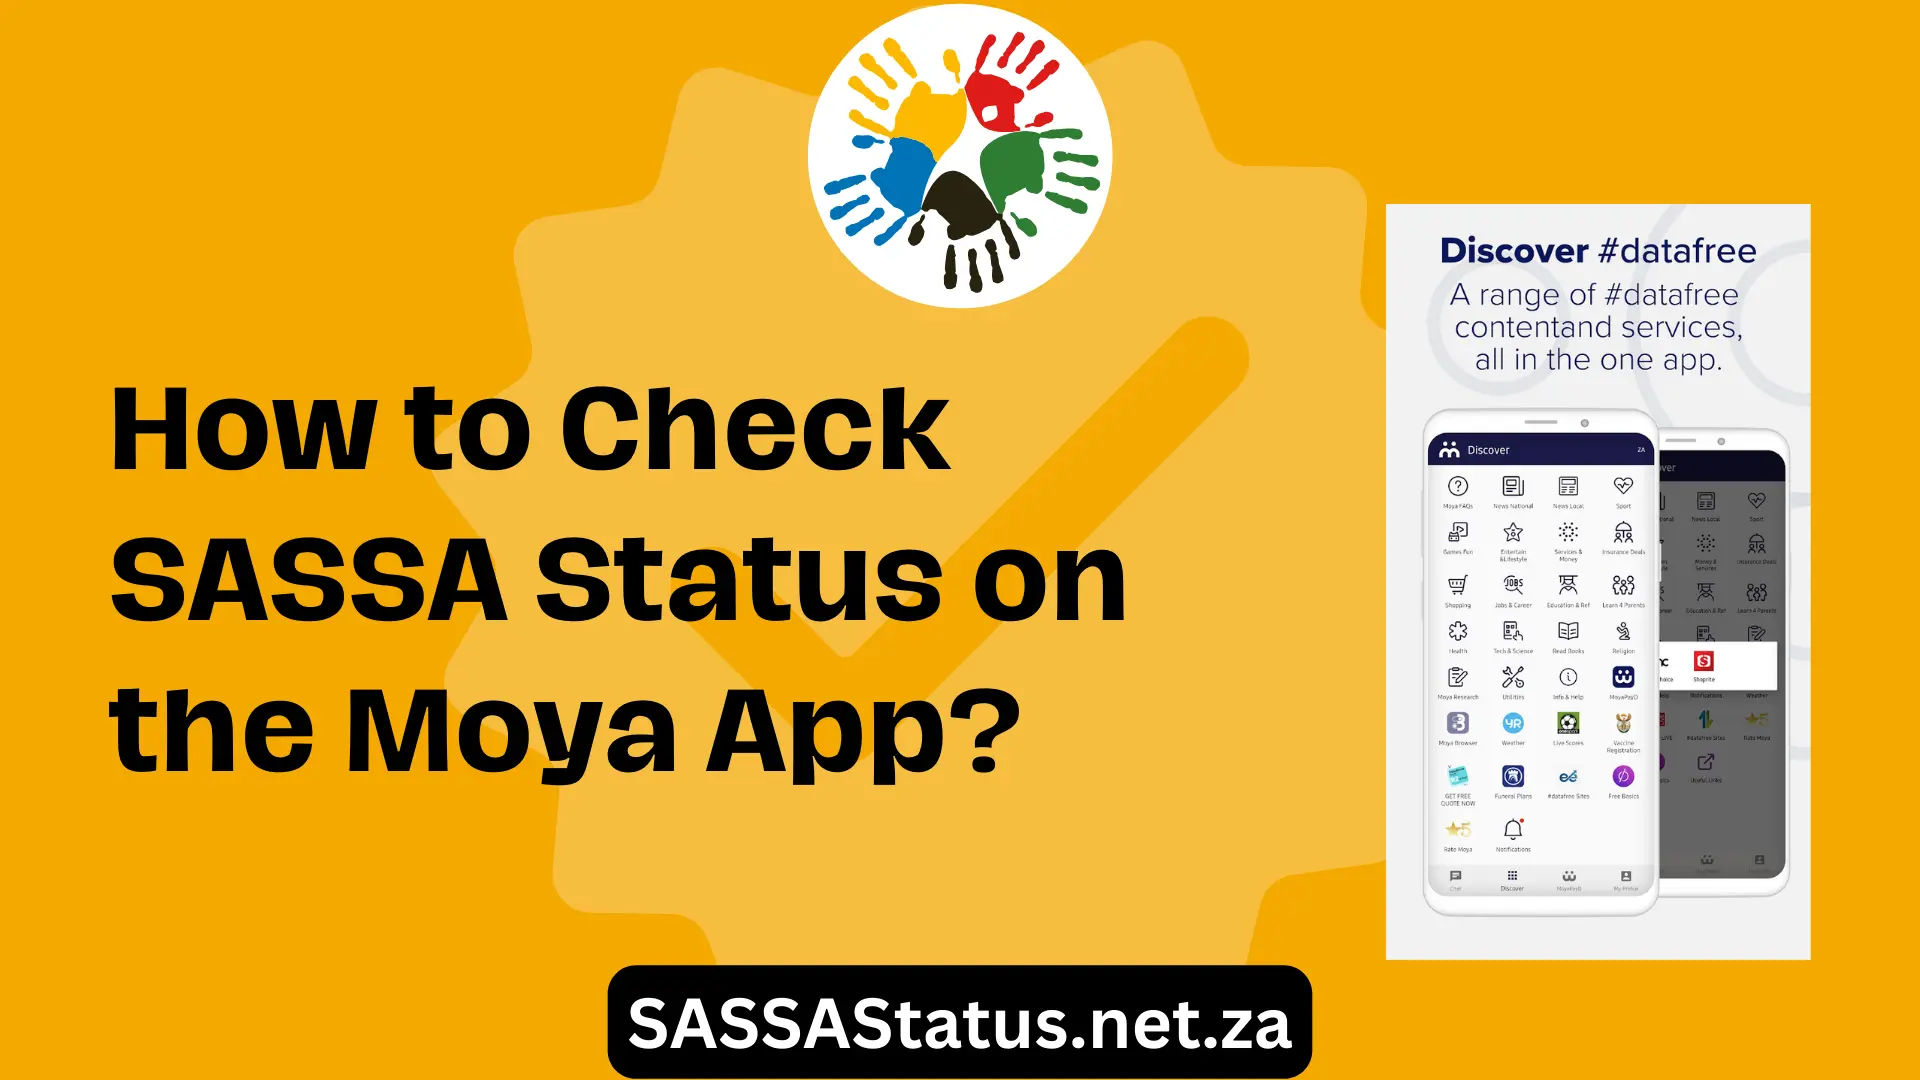 How to Check SASSA Status on the Moya App